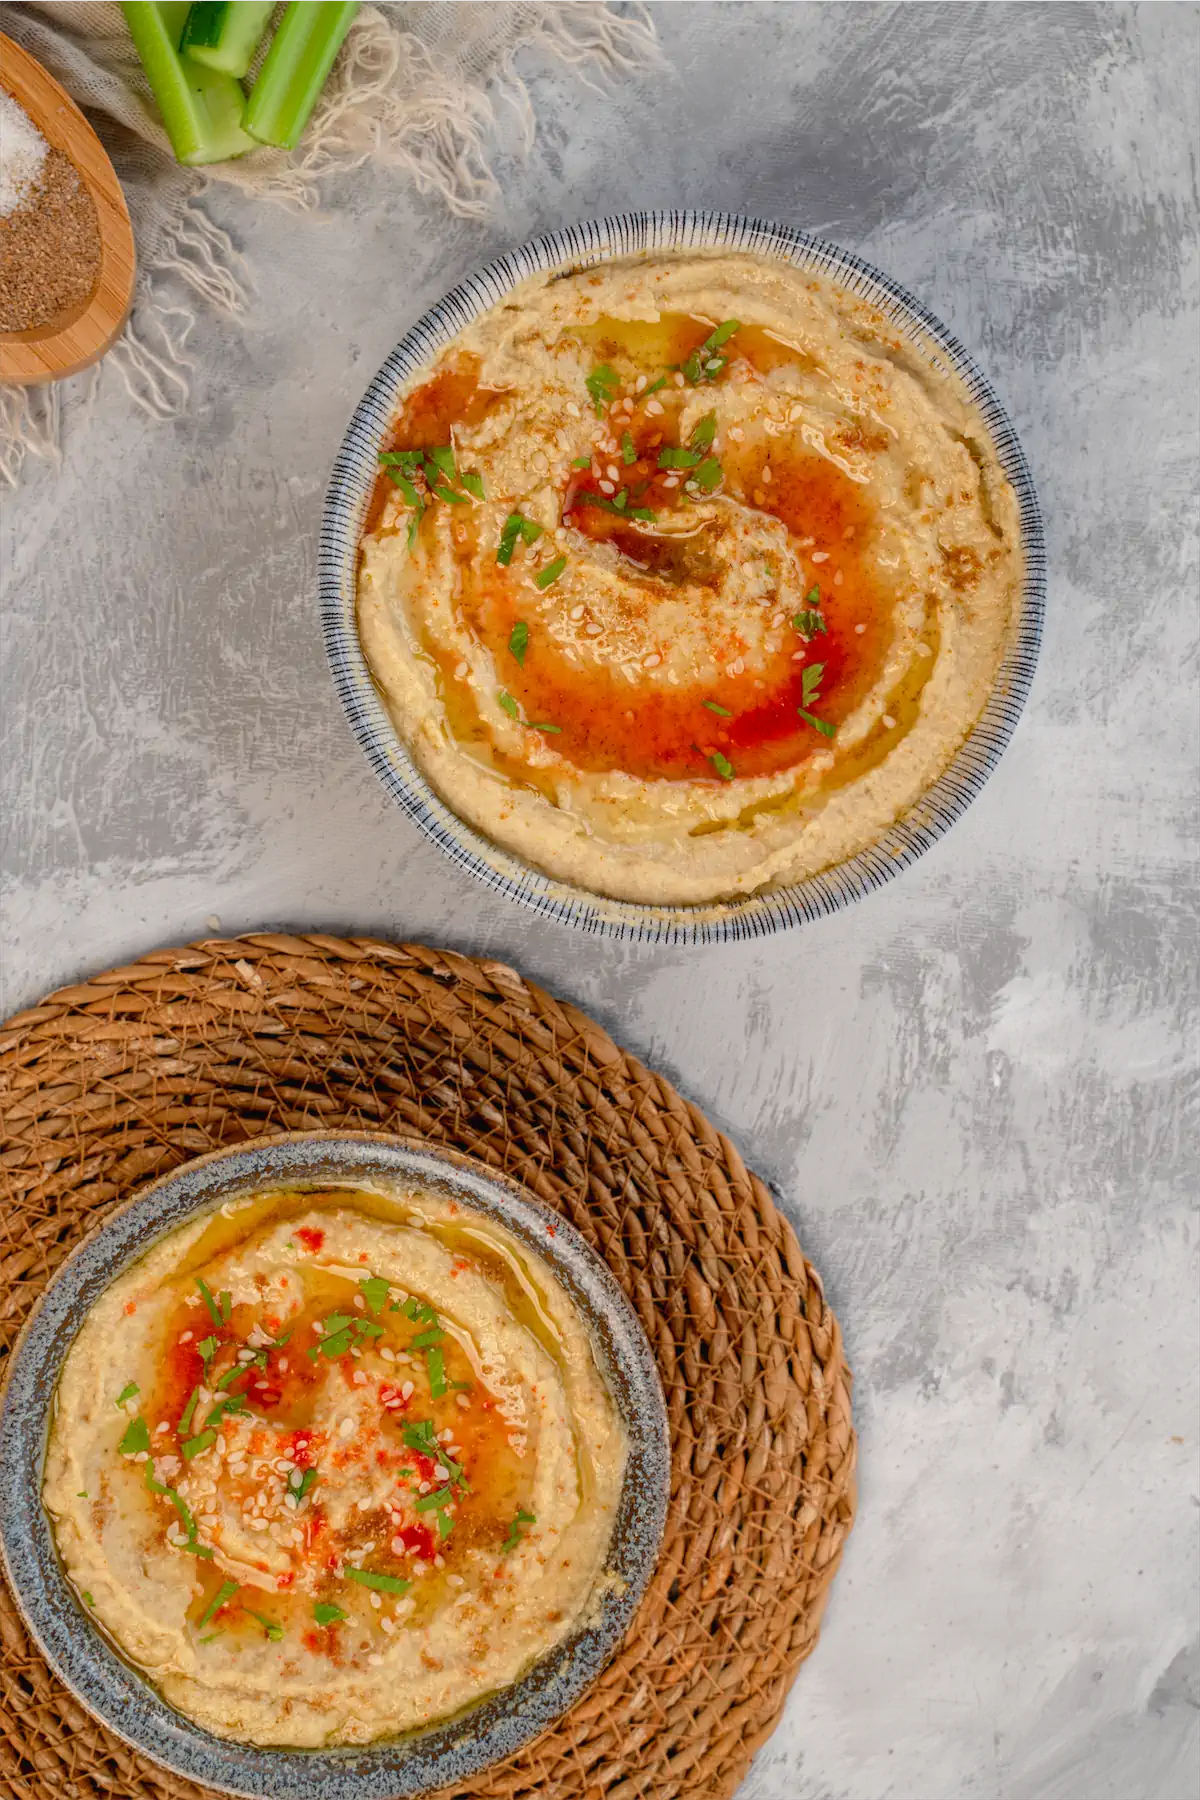 Keto artichoke hummus recipe served in bowls.